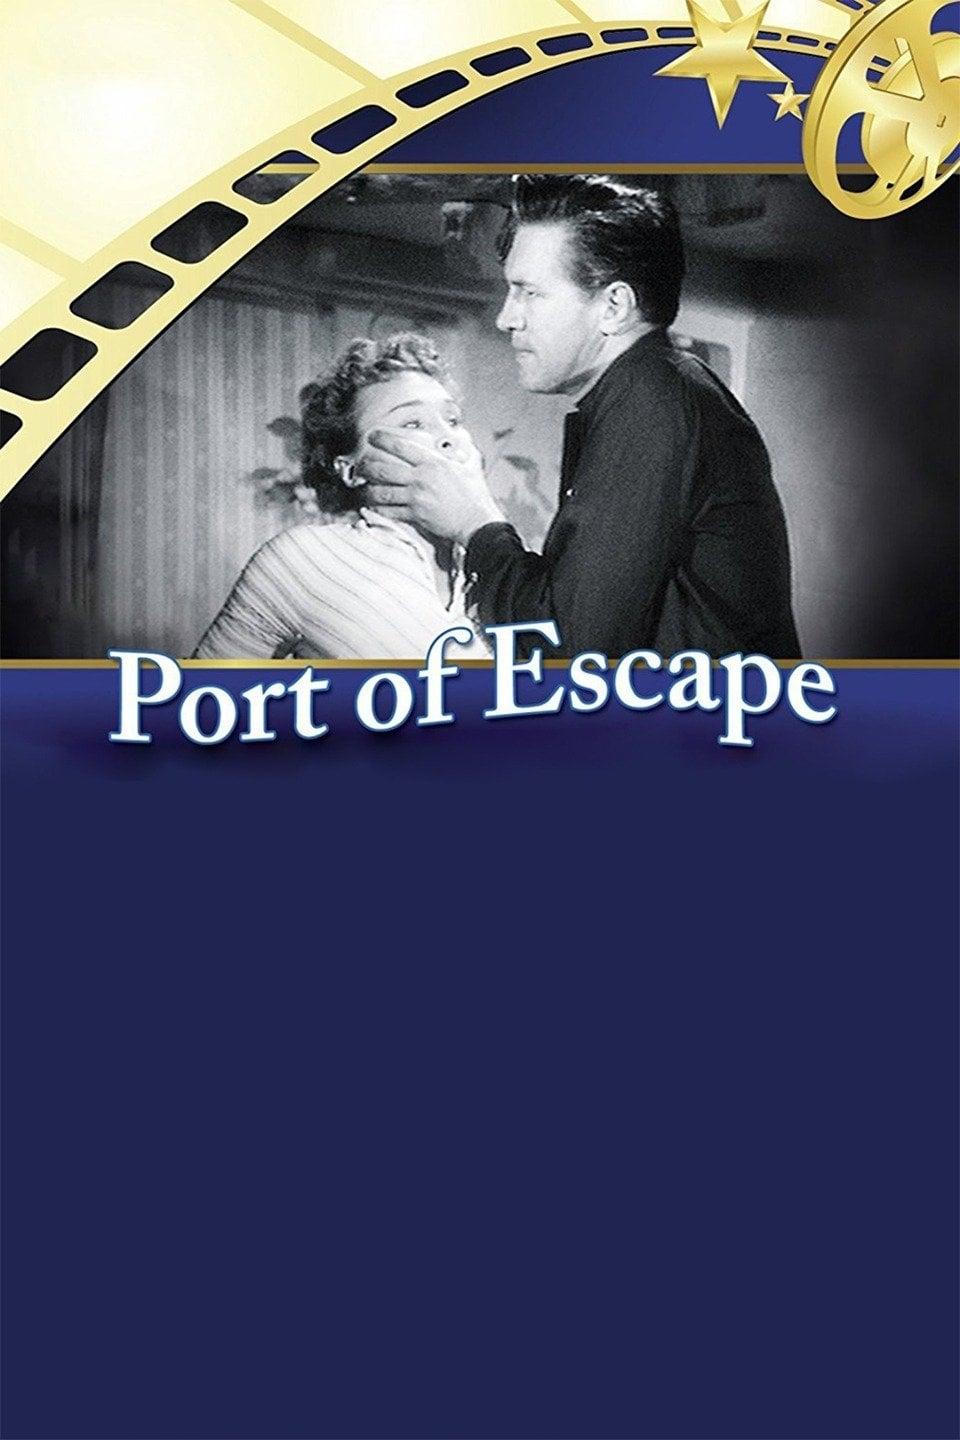 Port of Escape poster